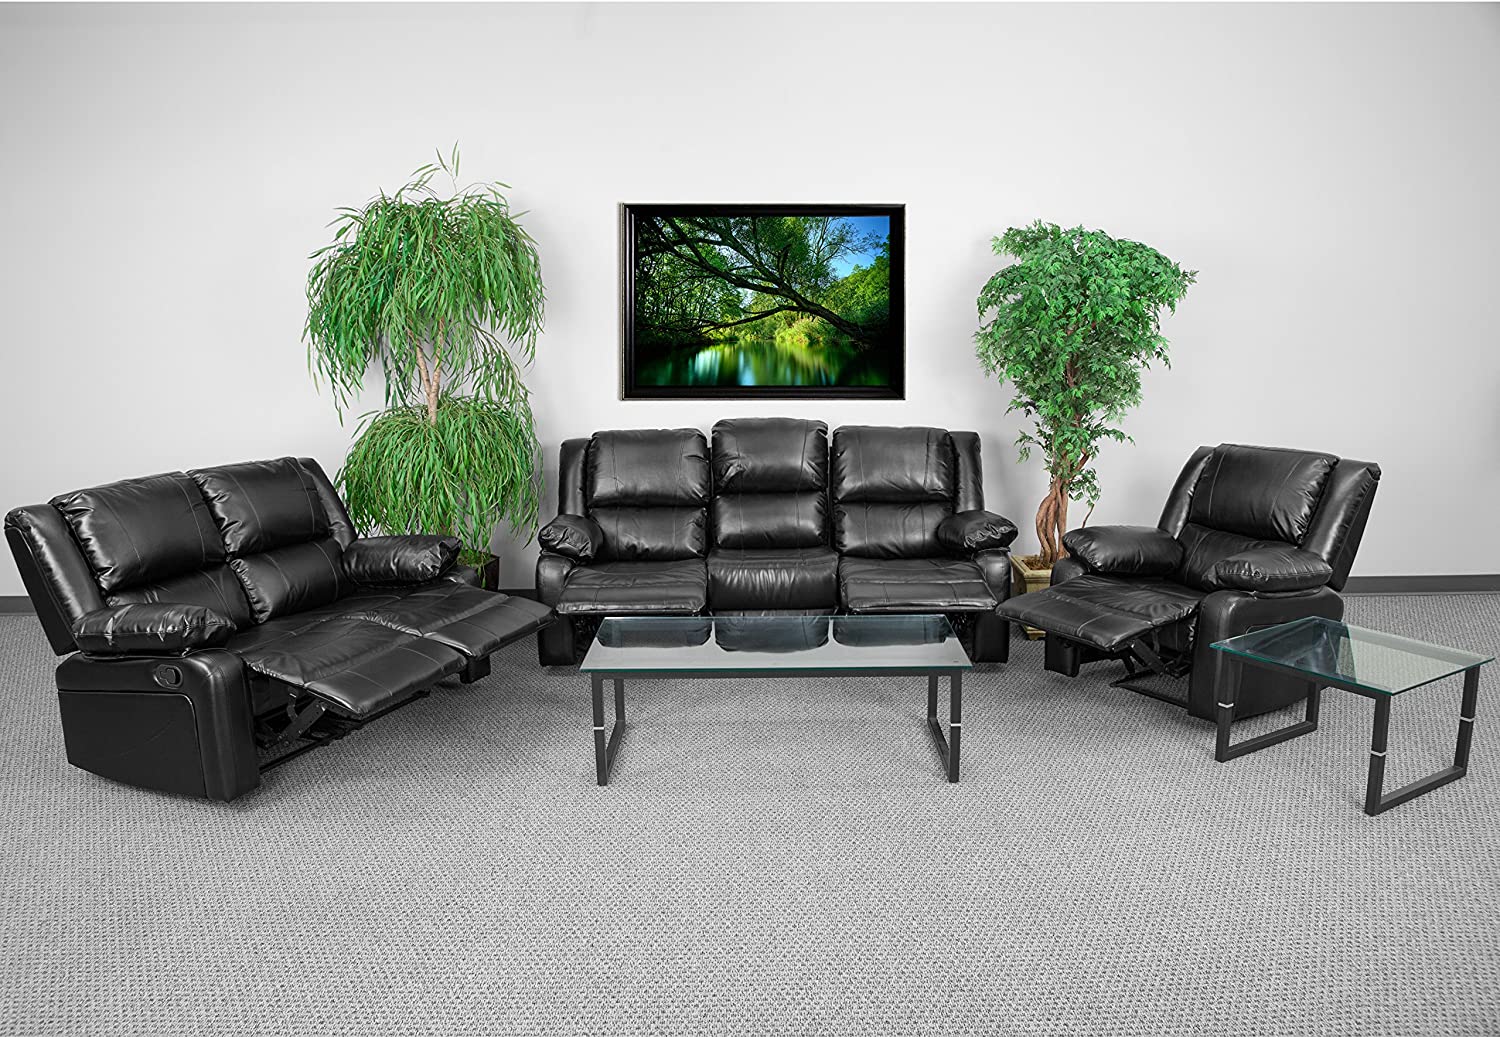 Flash Furniture Harmony Series Black LeatherSoft Reclining Sofa Set